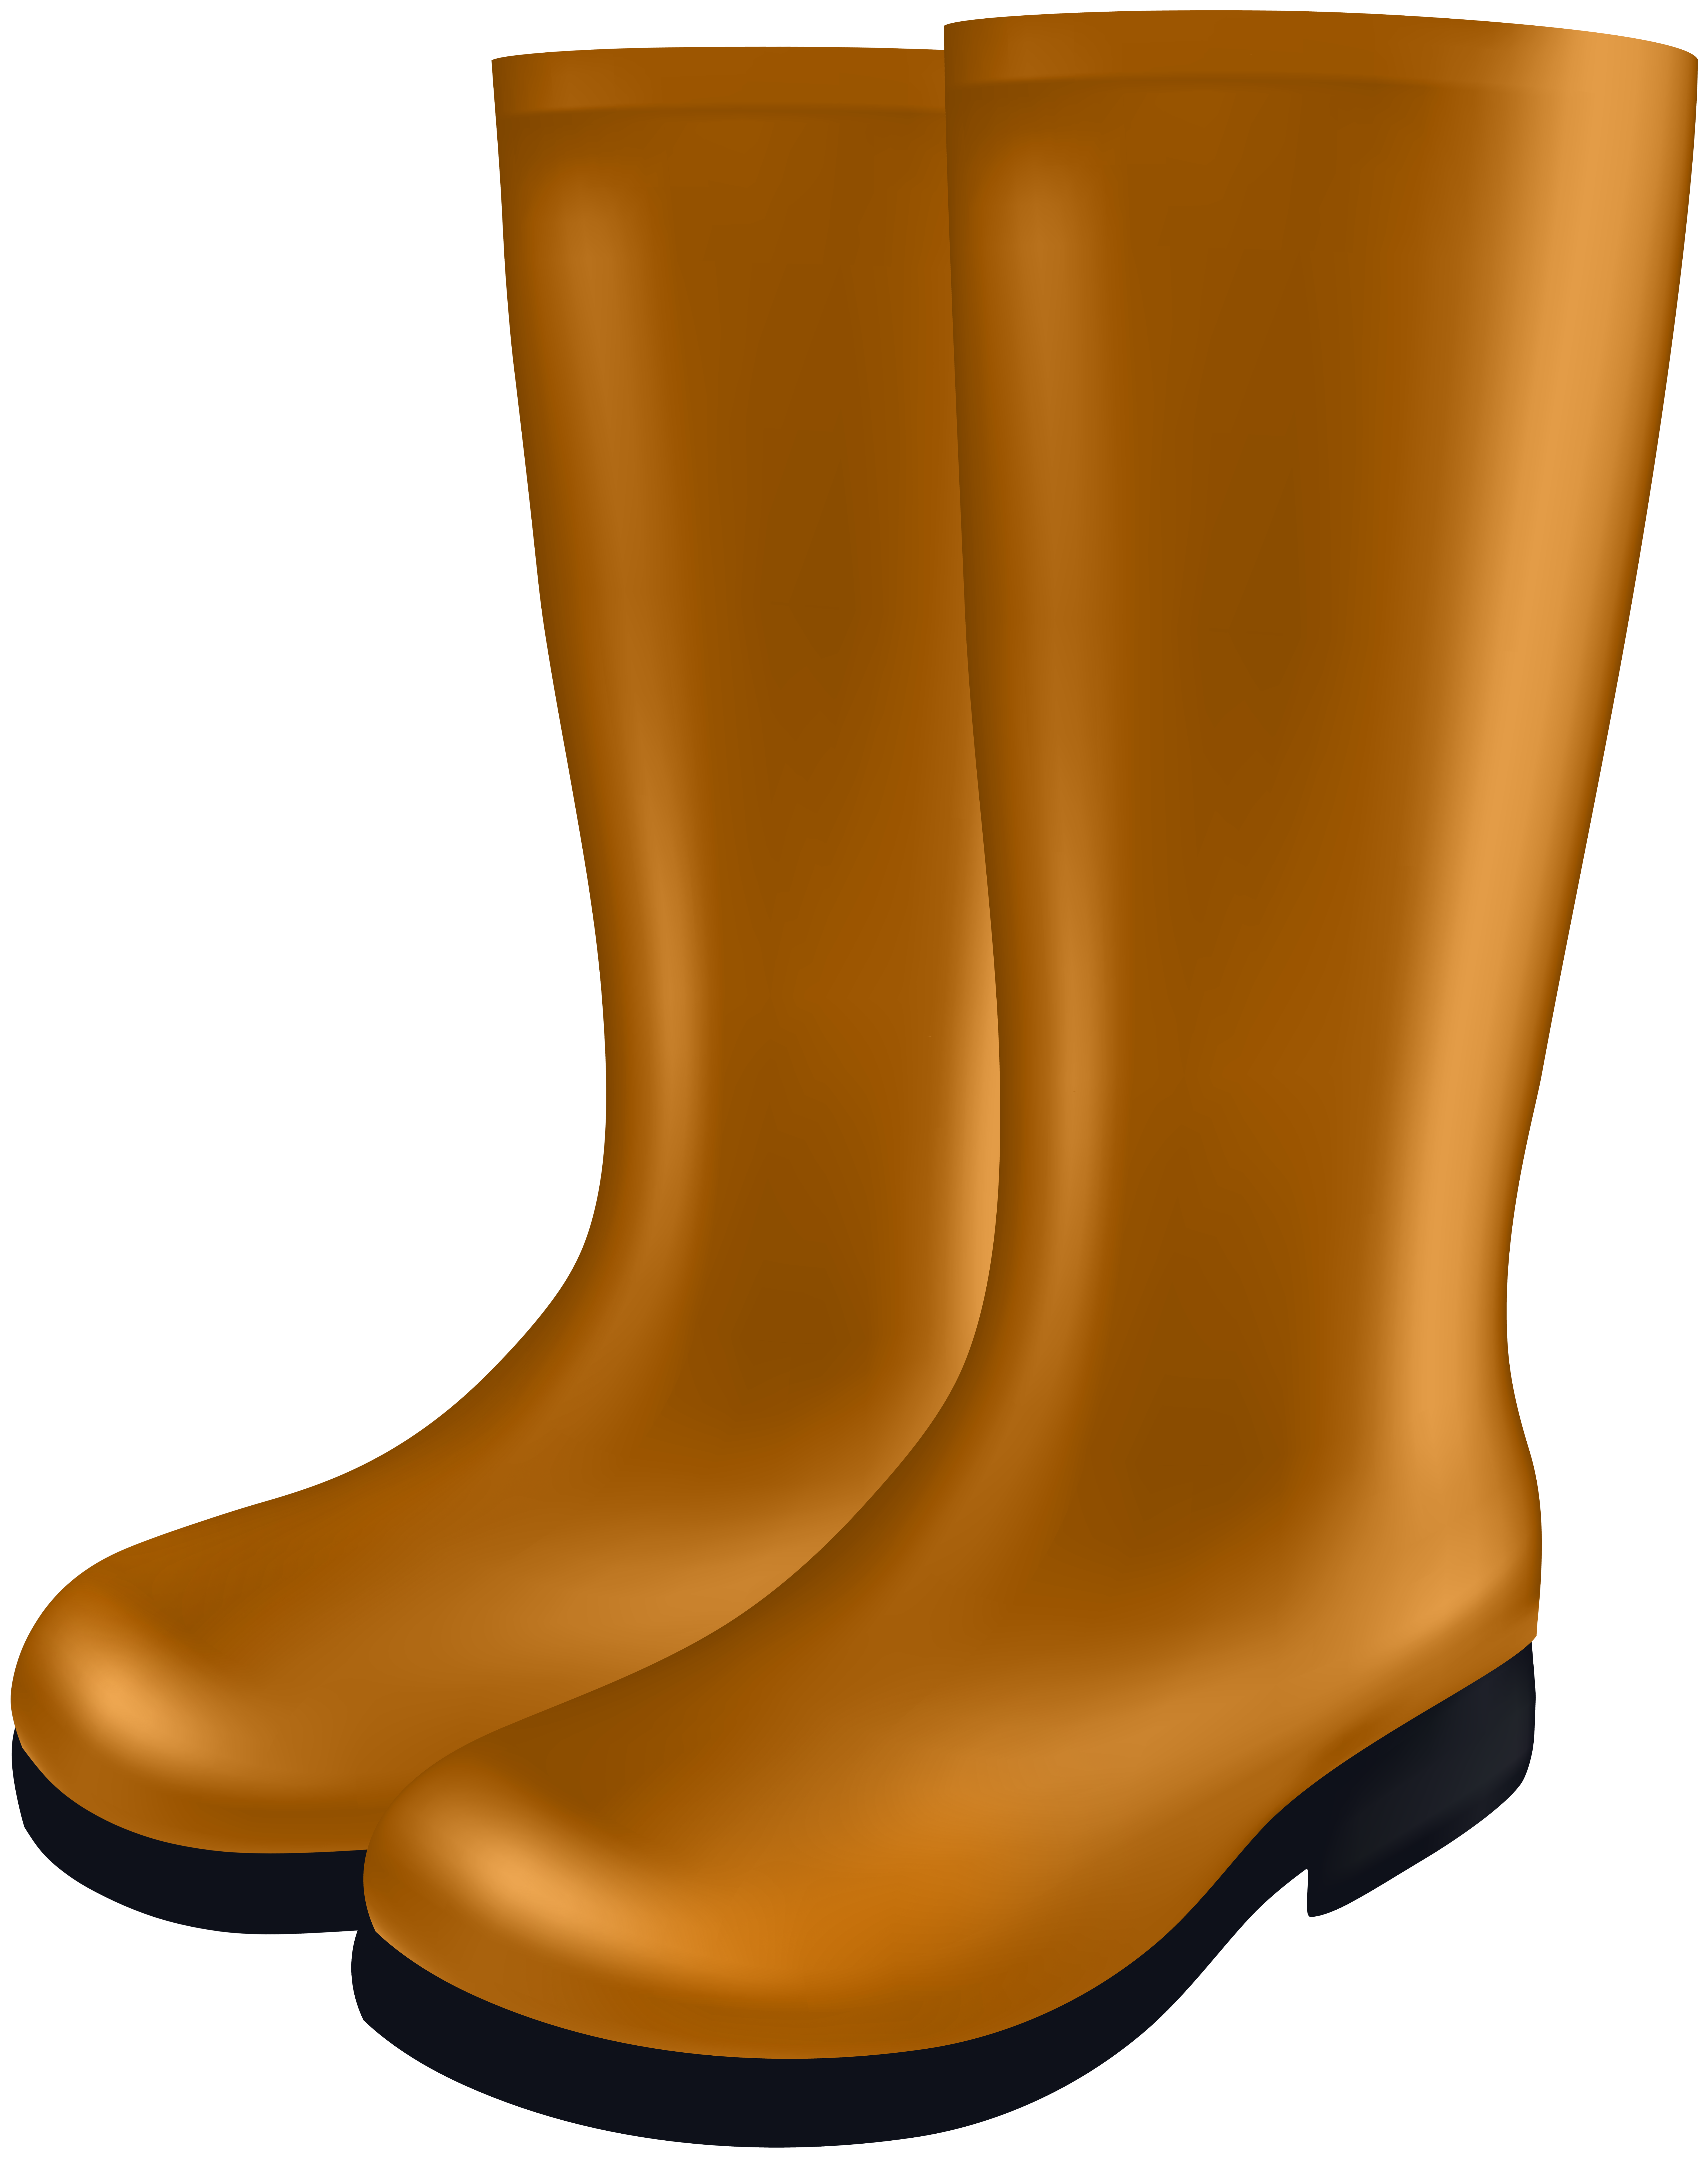 Rubber Boots PNG Clip Art Image.